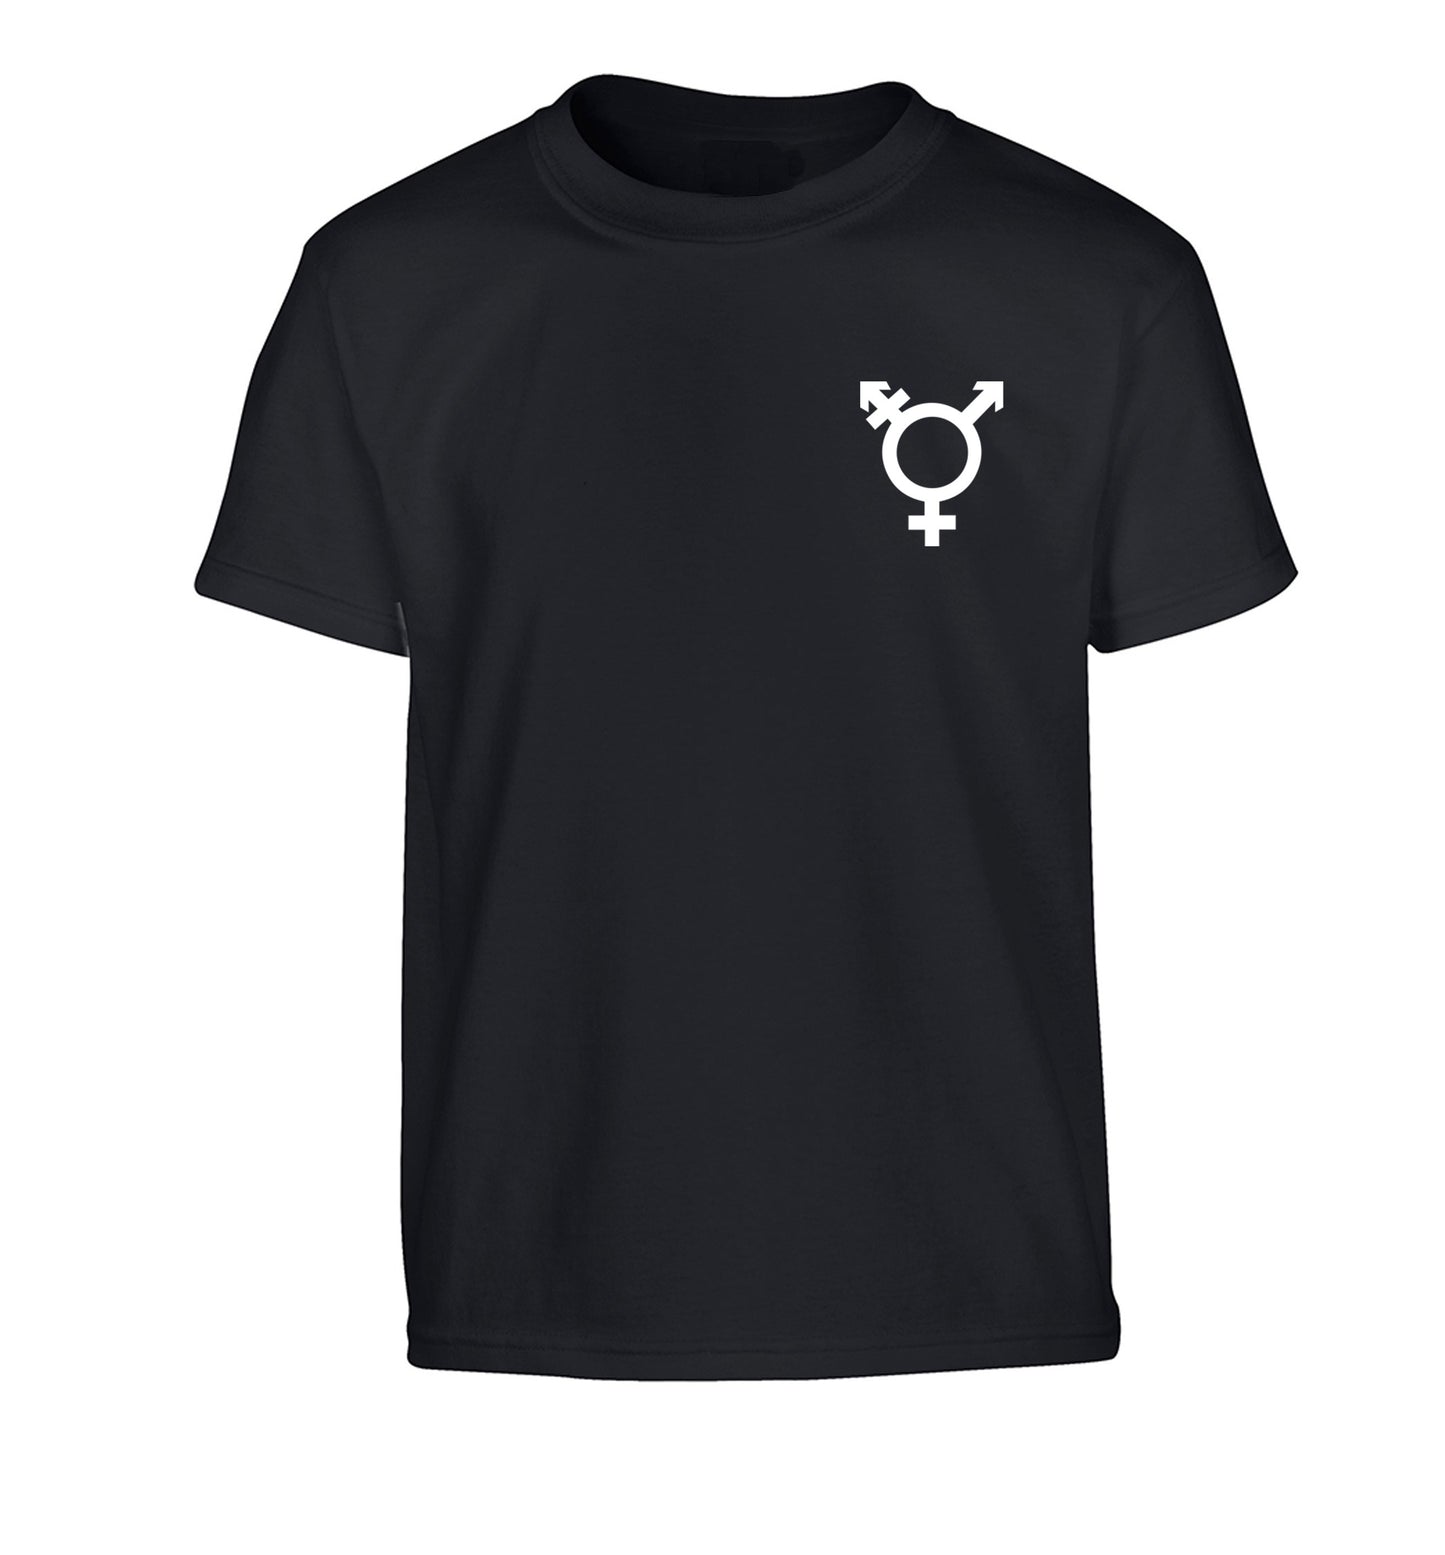 Trans gender symbol pocket Children's black Tshirt 12-14 Years